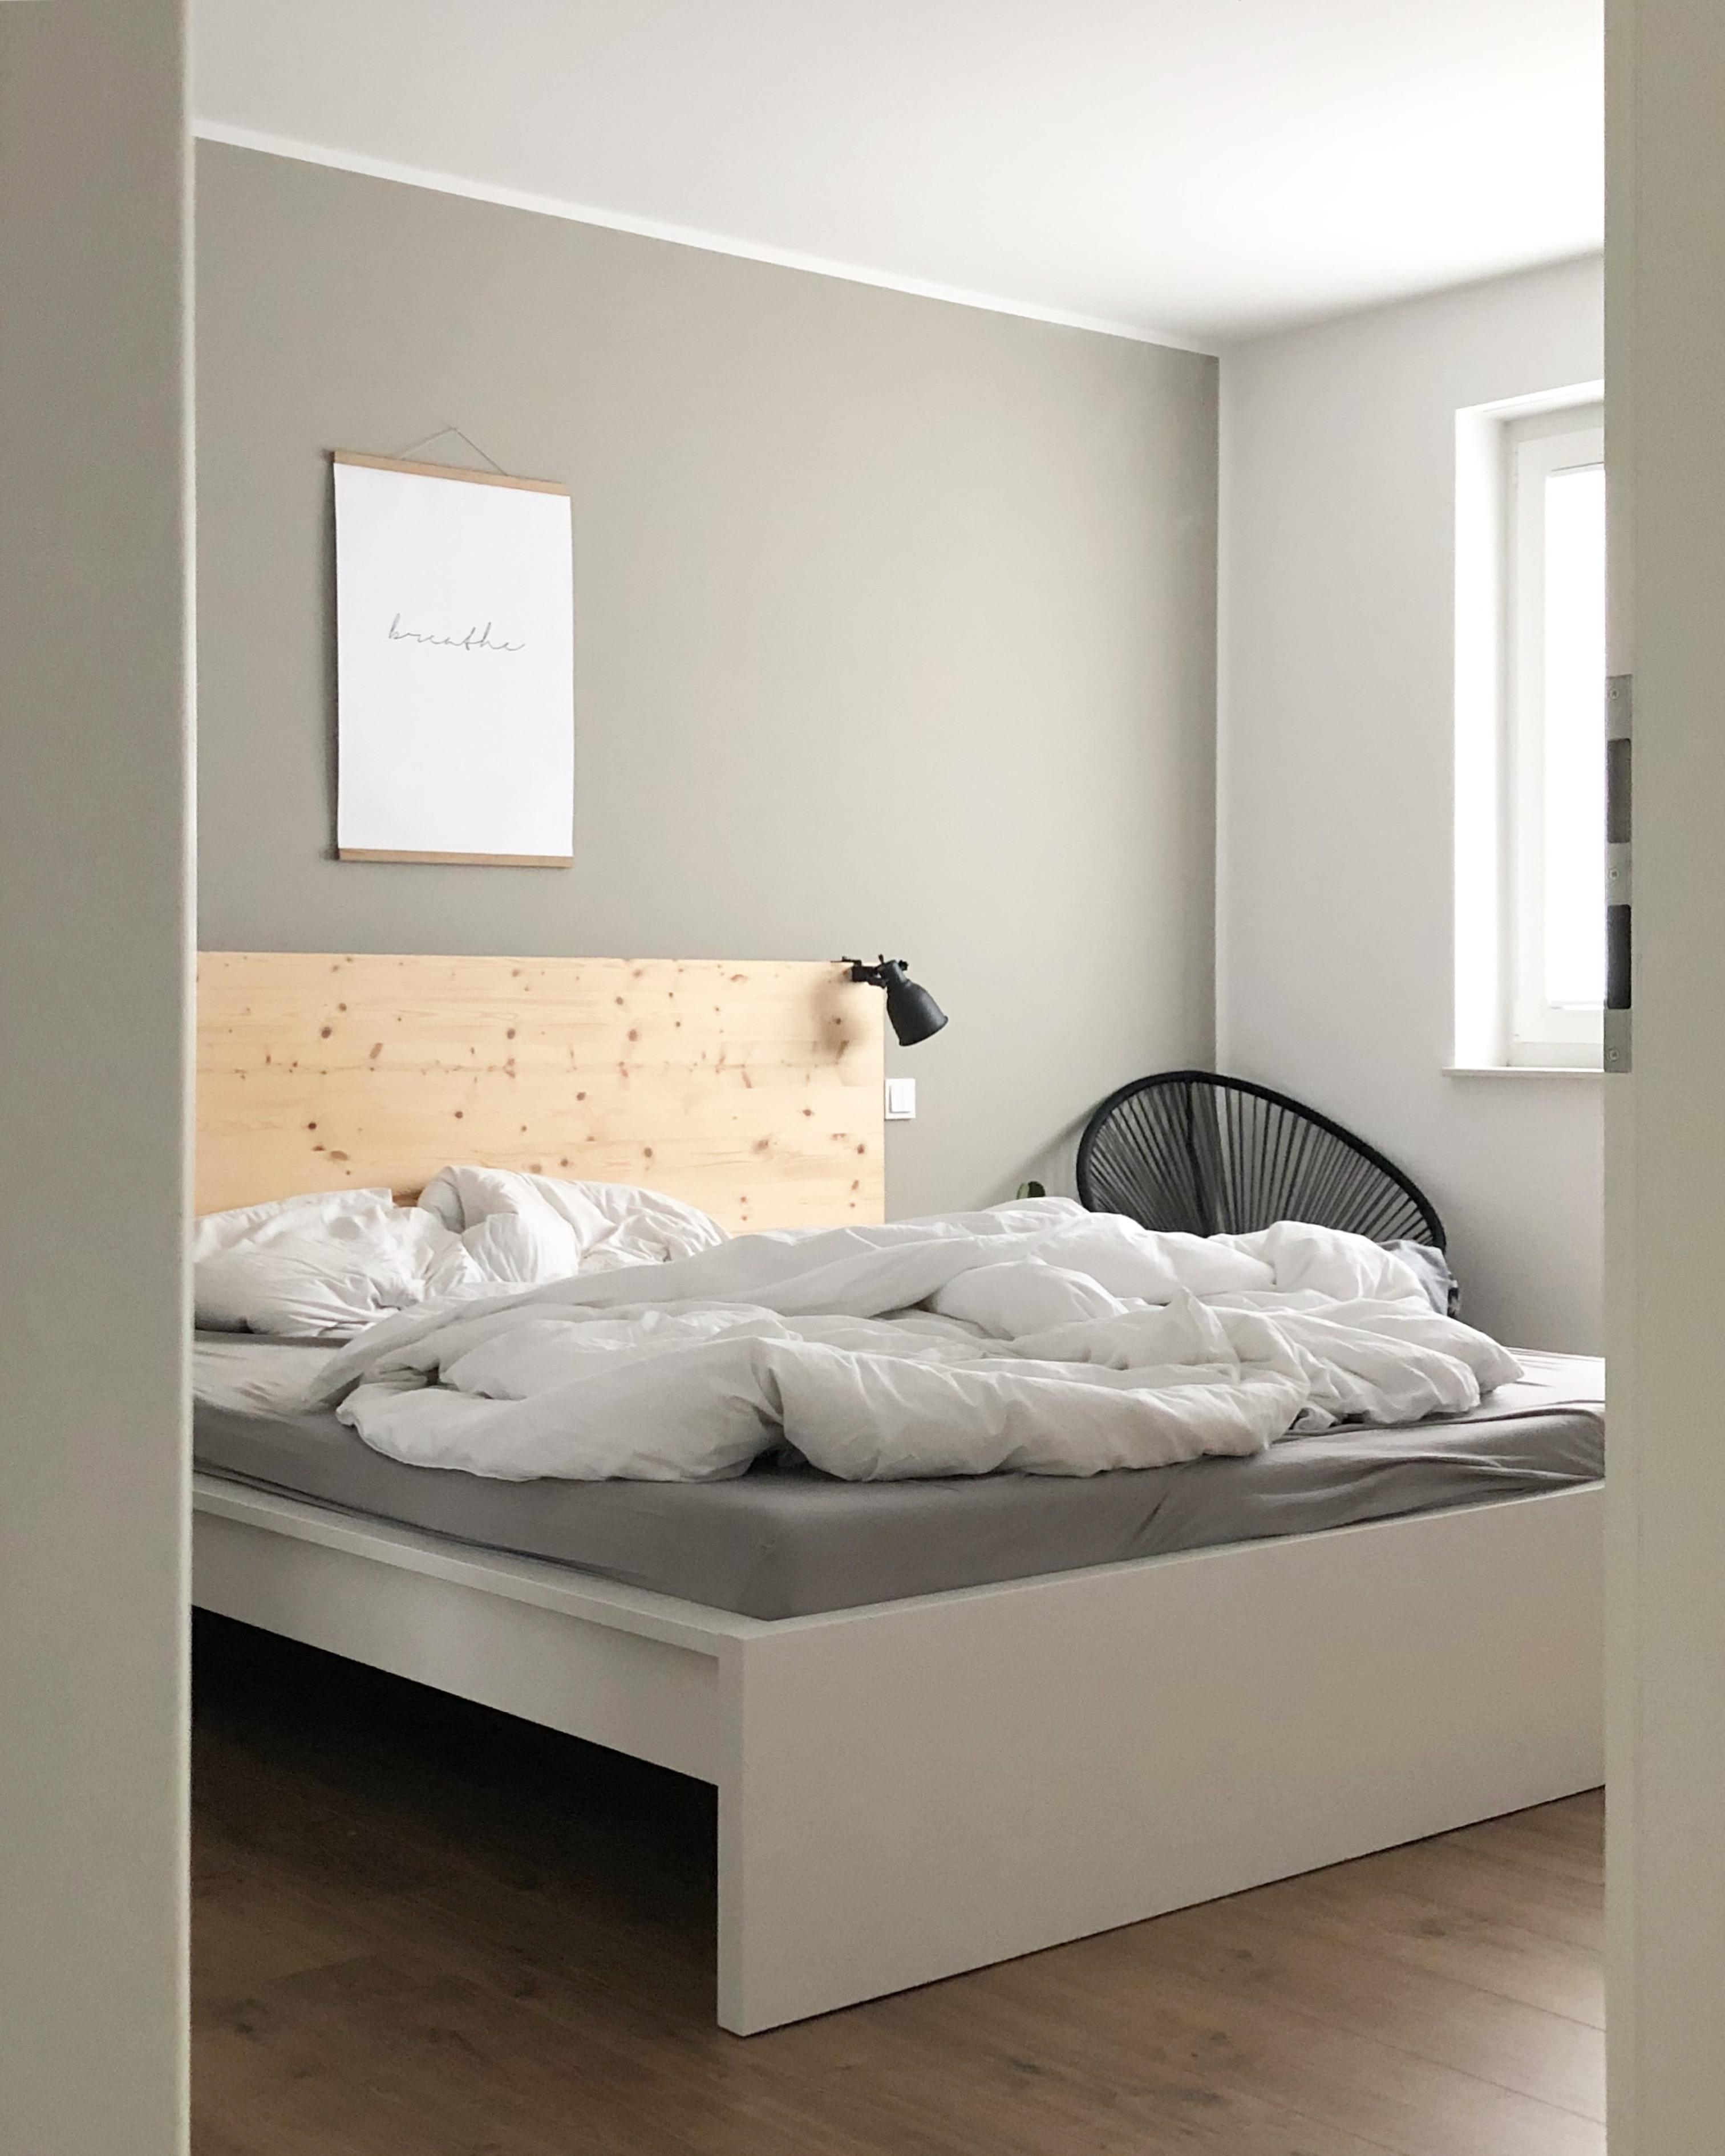 Never iron your bed sheets ♡ 
#bett #schlafzimmer #ikea #malmbett #ikeahack #holz #interior #scandi 